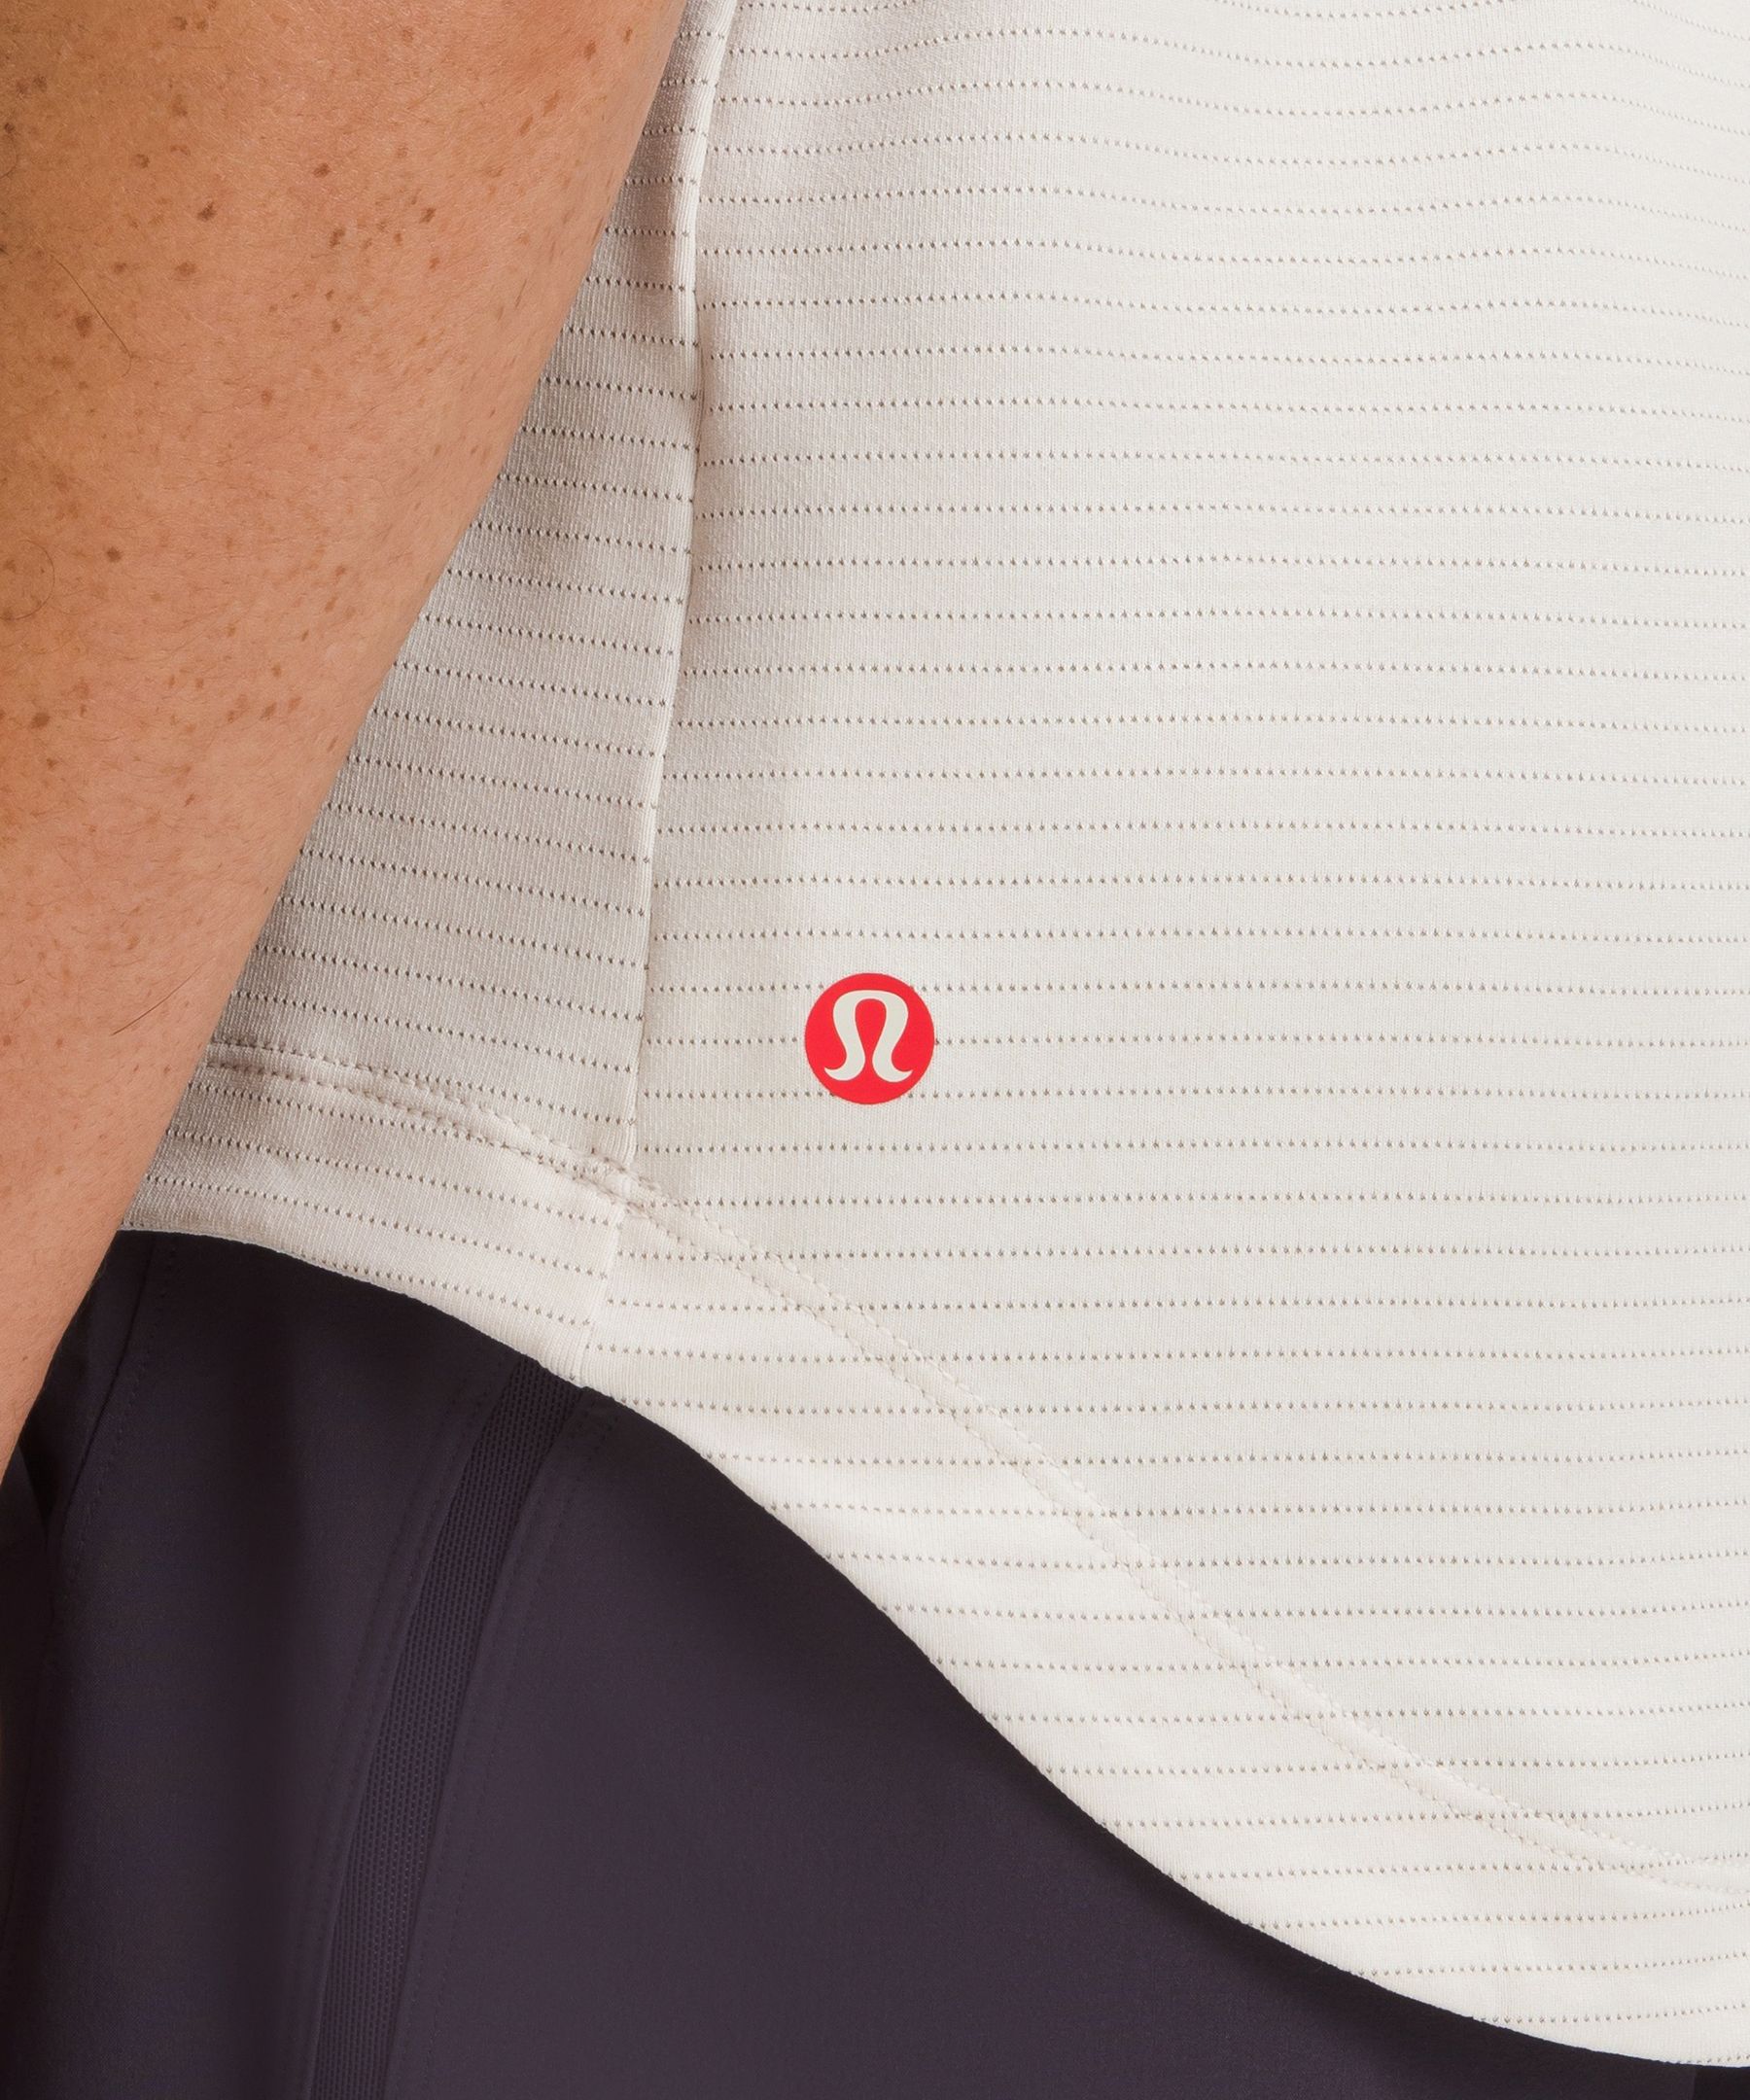 Team Canada License to Train Short-Sleeve Shirt *COC Logo | Men's Short Sleeve Shirts & Tee's